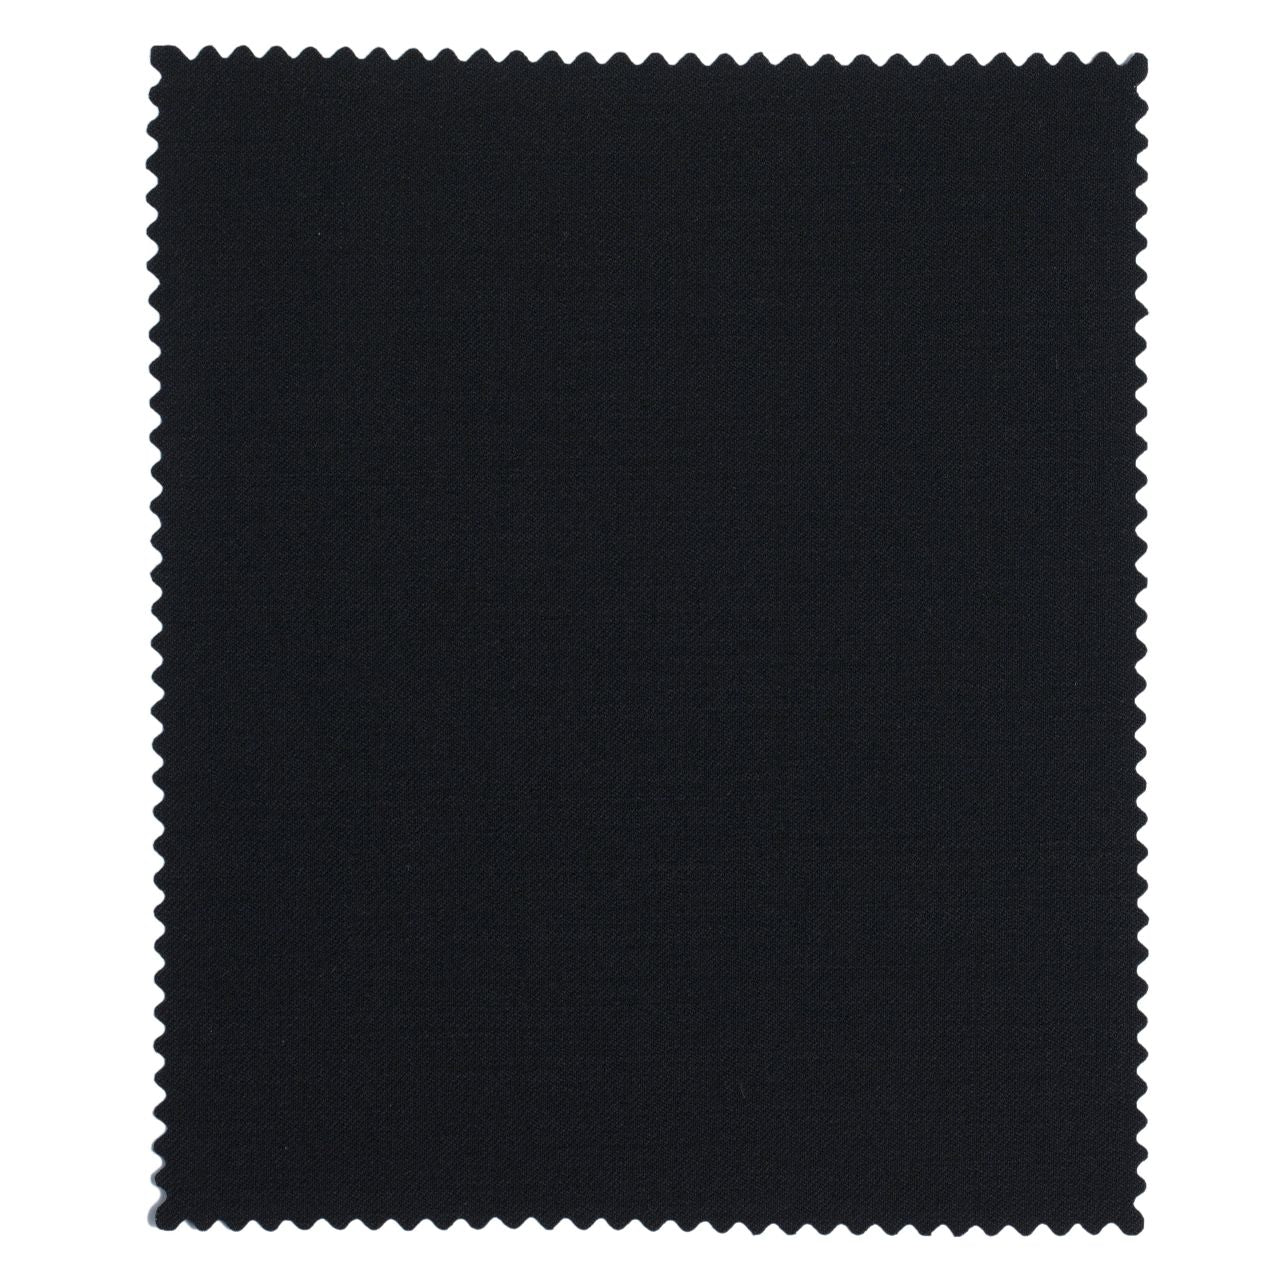 Super 120s Wool Gabardine Comfort-EZE Trouser in Black (Manchester Pleated Model) by Ballin